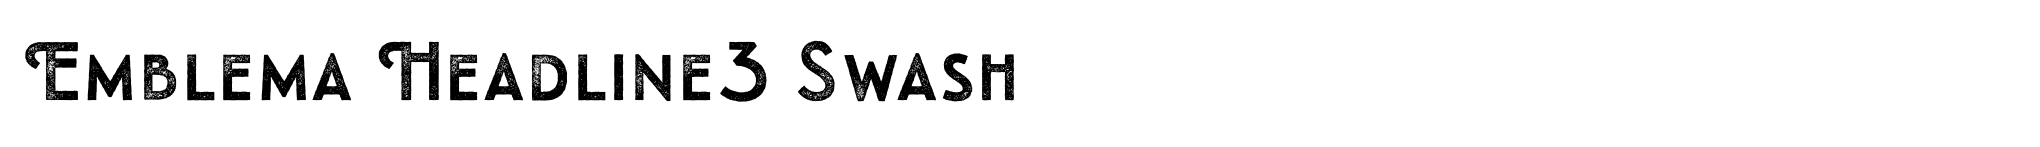 Emblema Headline3 Swash image